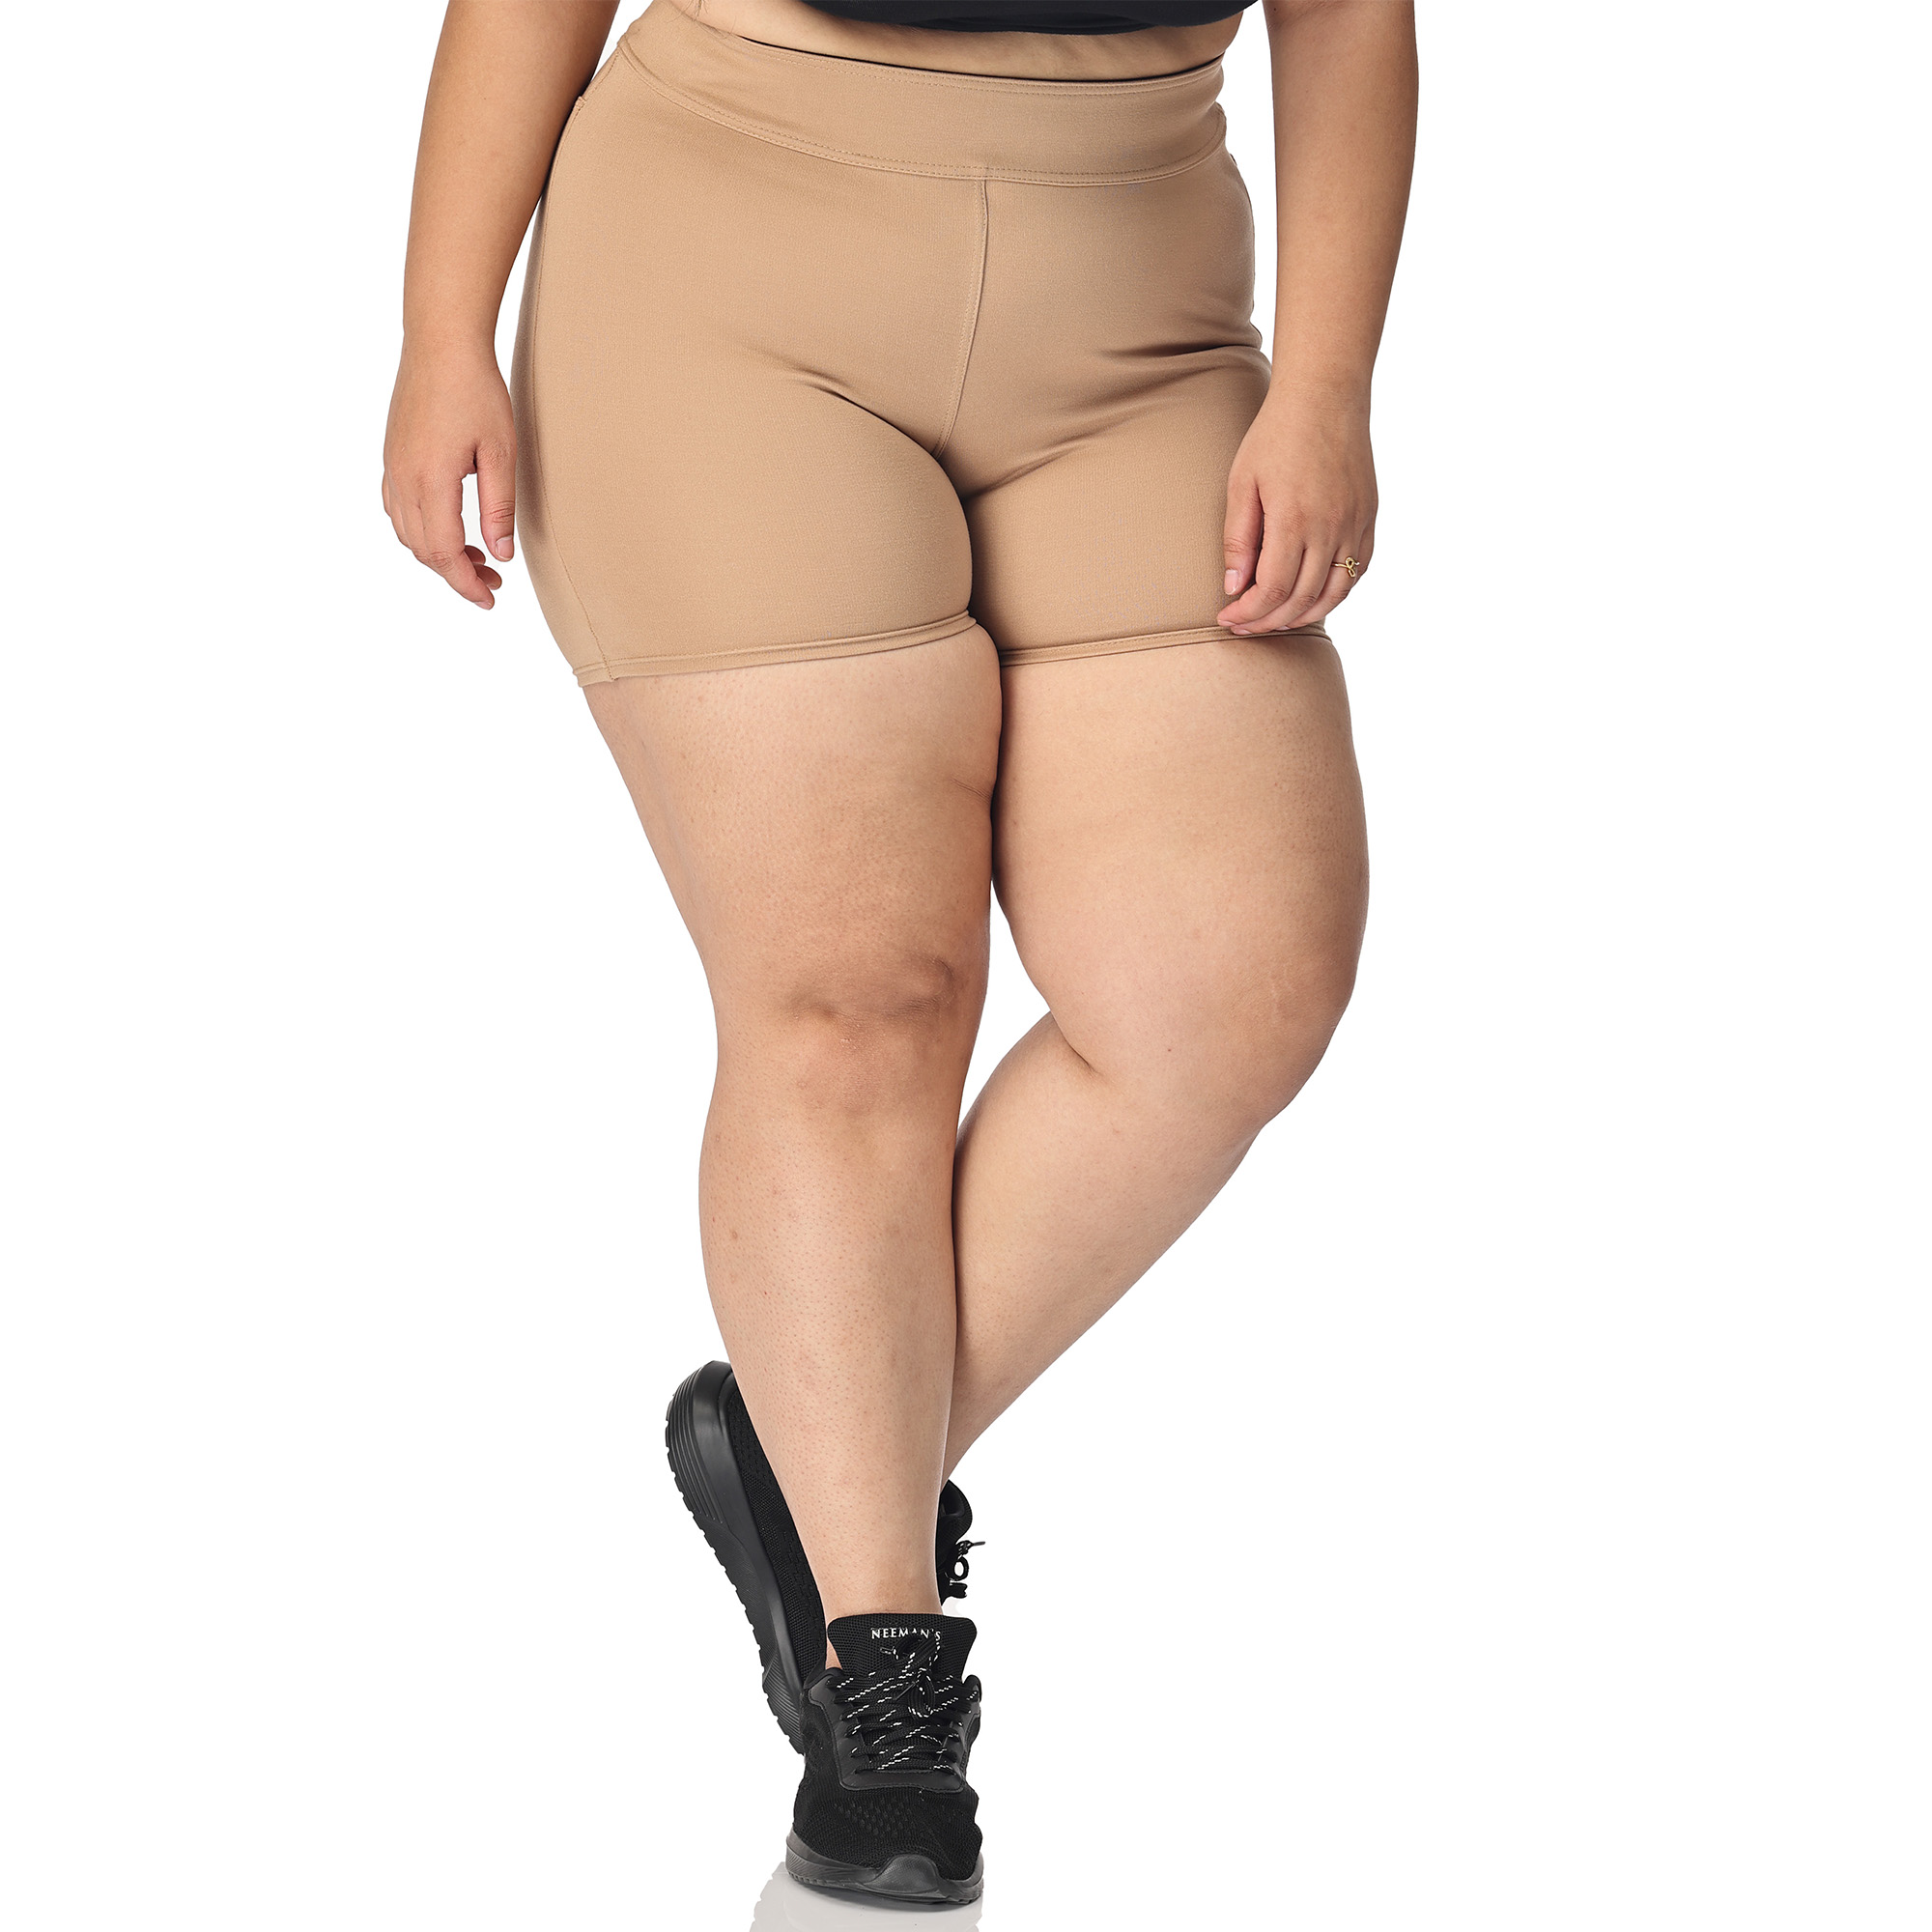 Khaki shorts women – Plus size active shape wear-2 back pockets